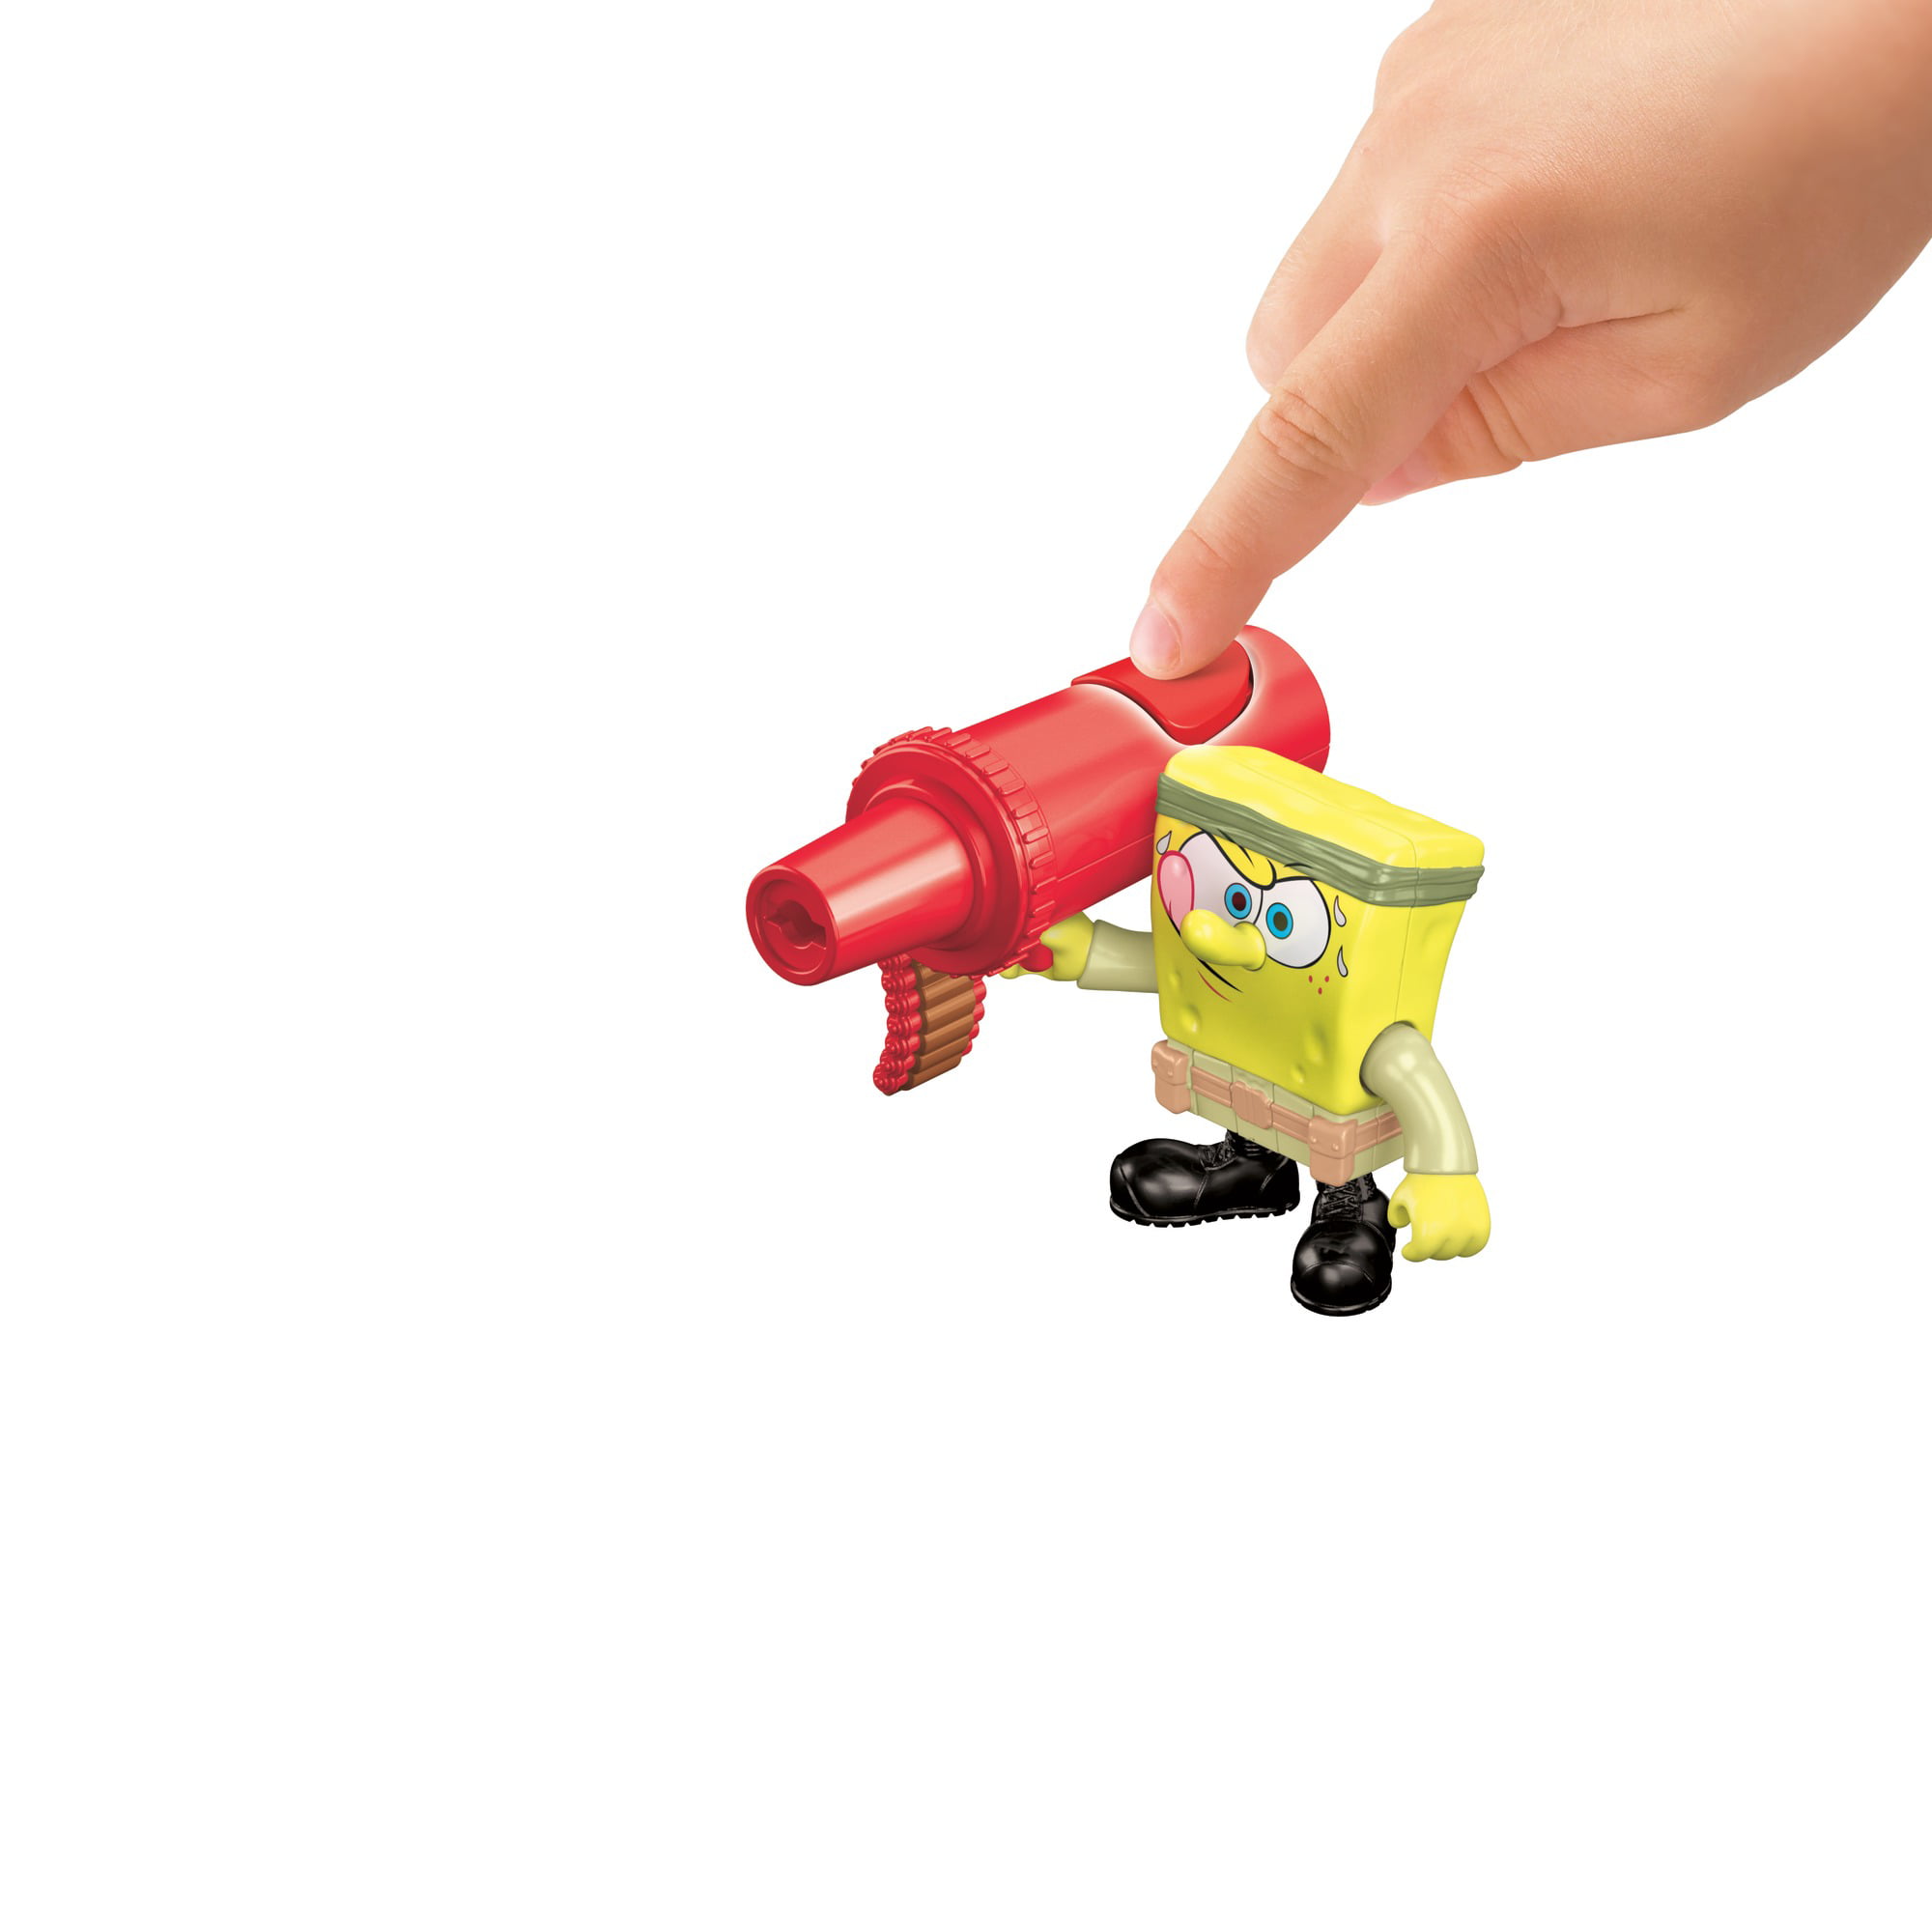 Fisher Price Imaginext Spongebob sponge bob Food Fight Mustard Ketchup Gun toy 